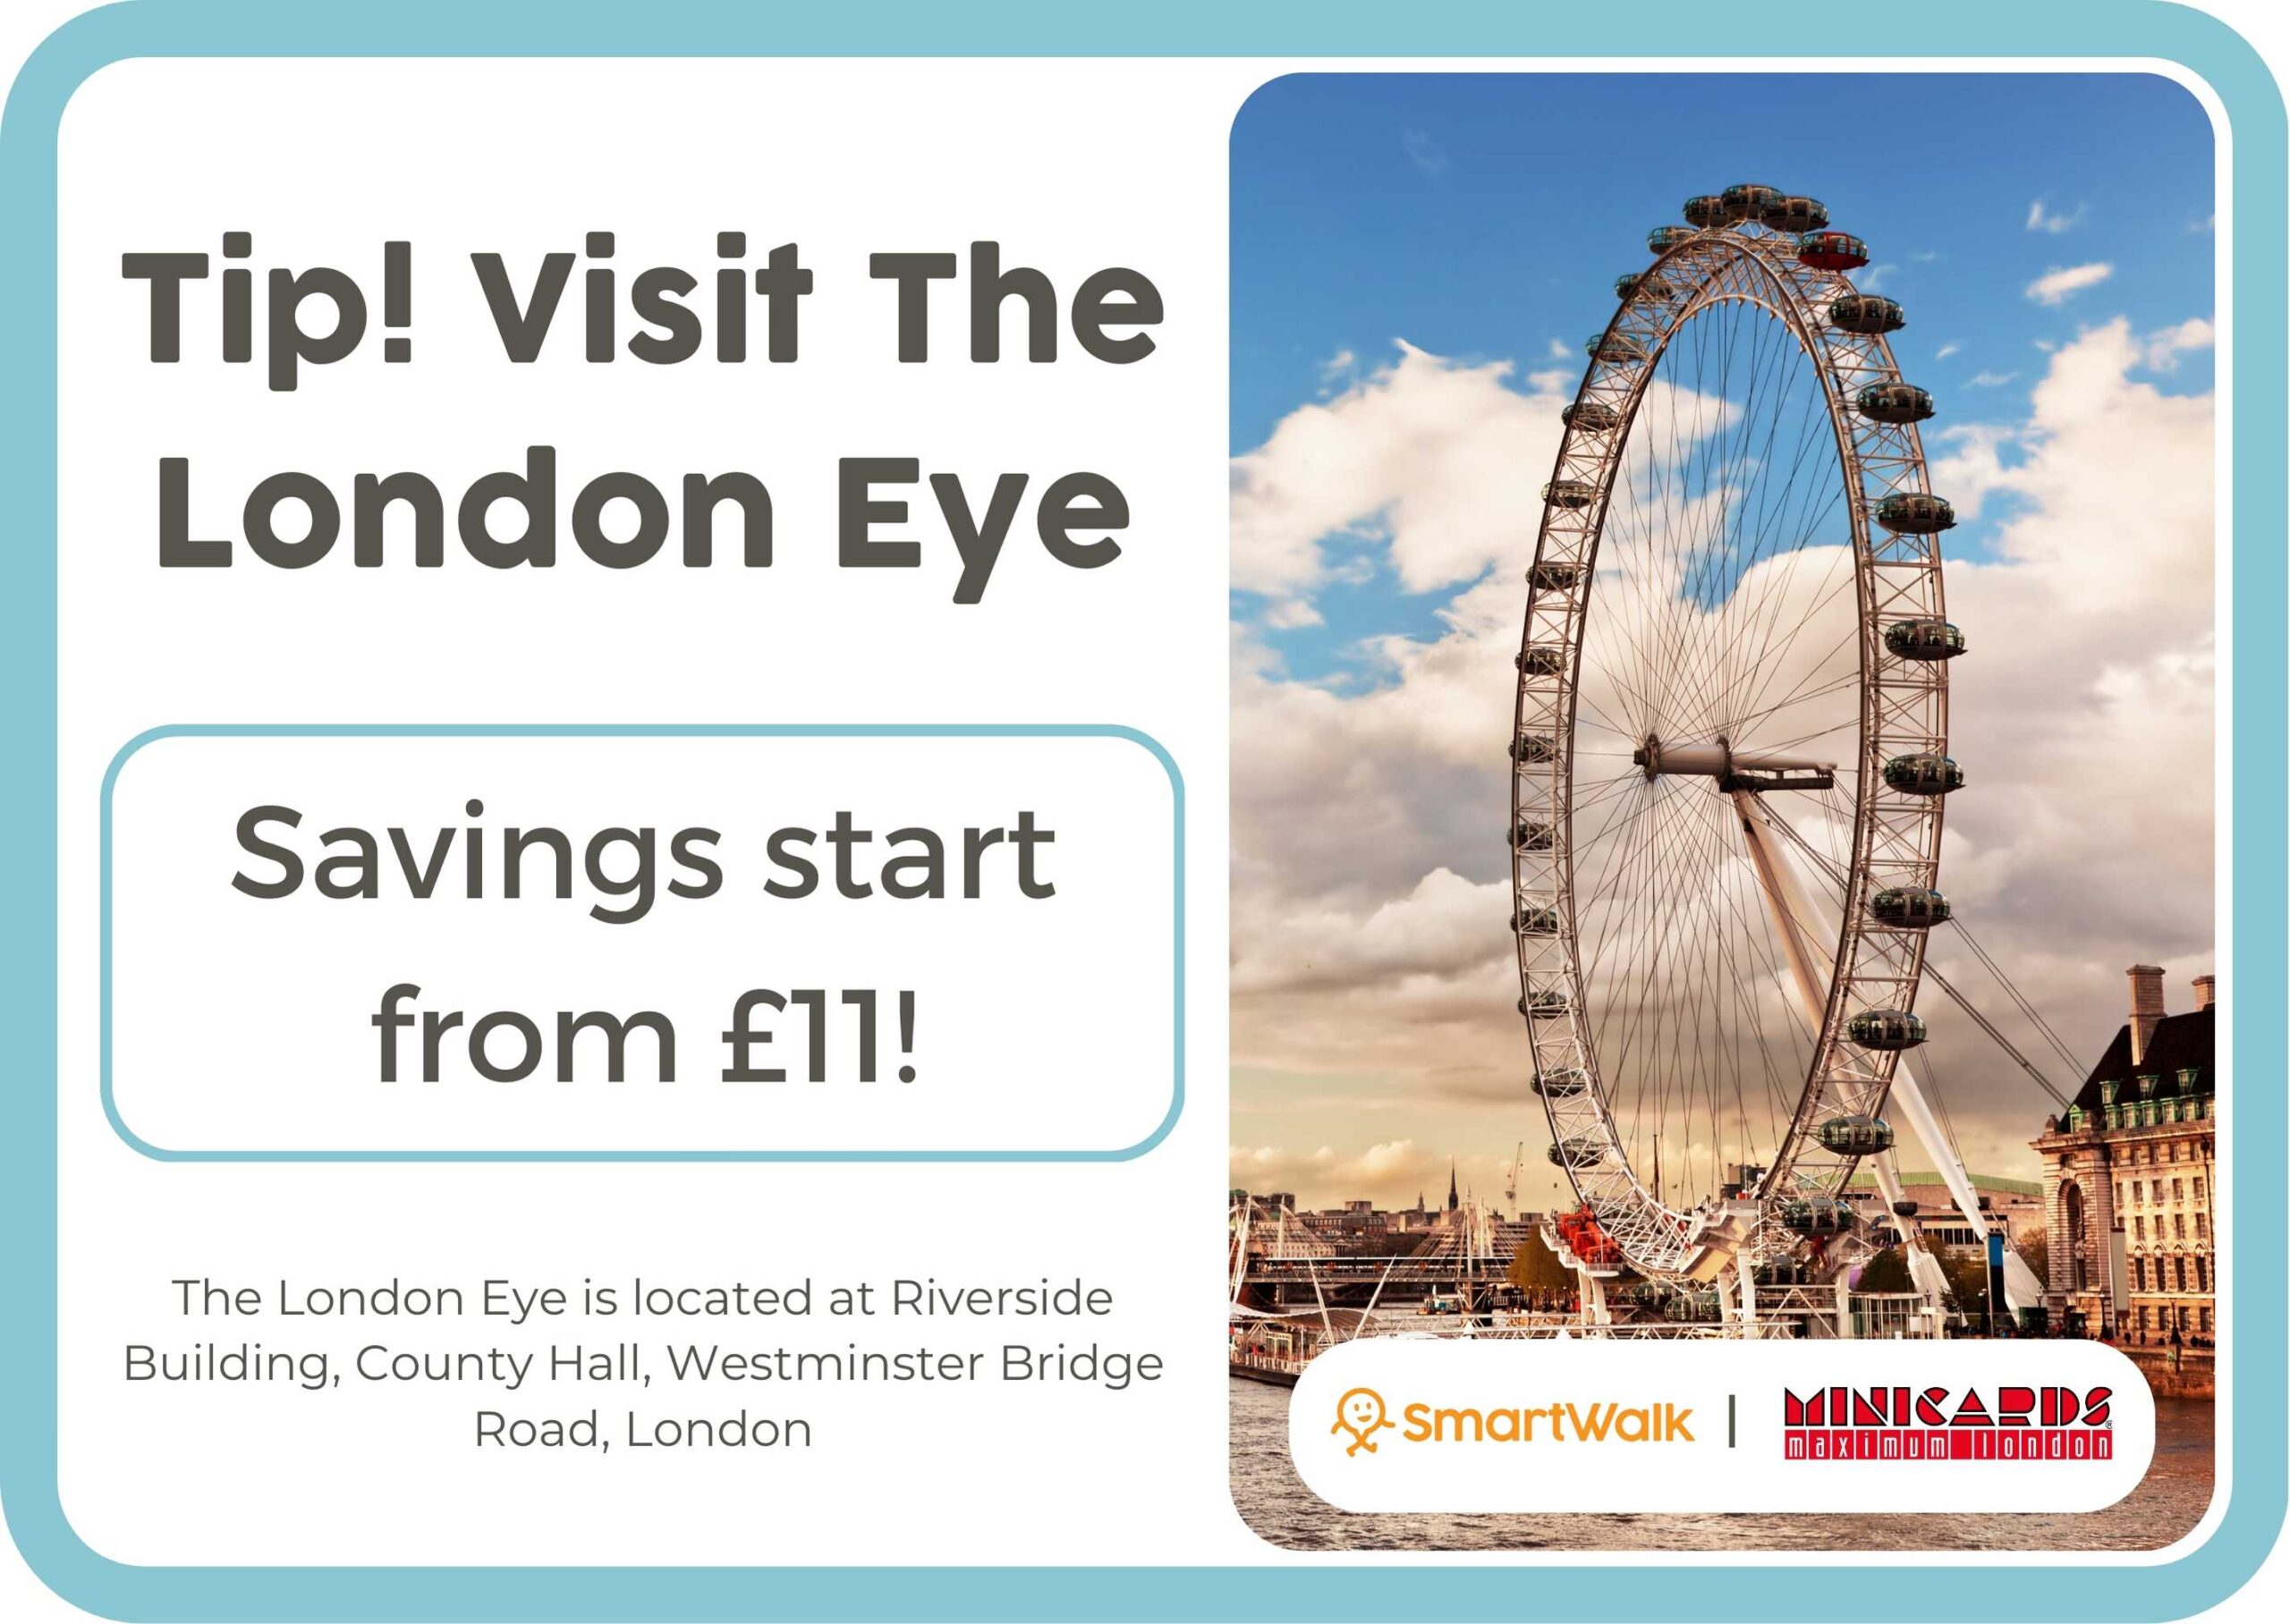 1. London eye